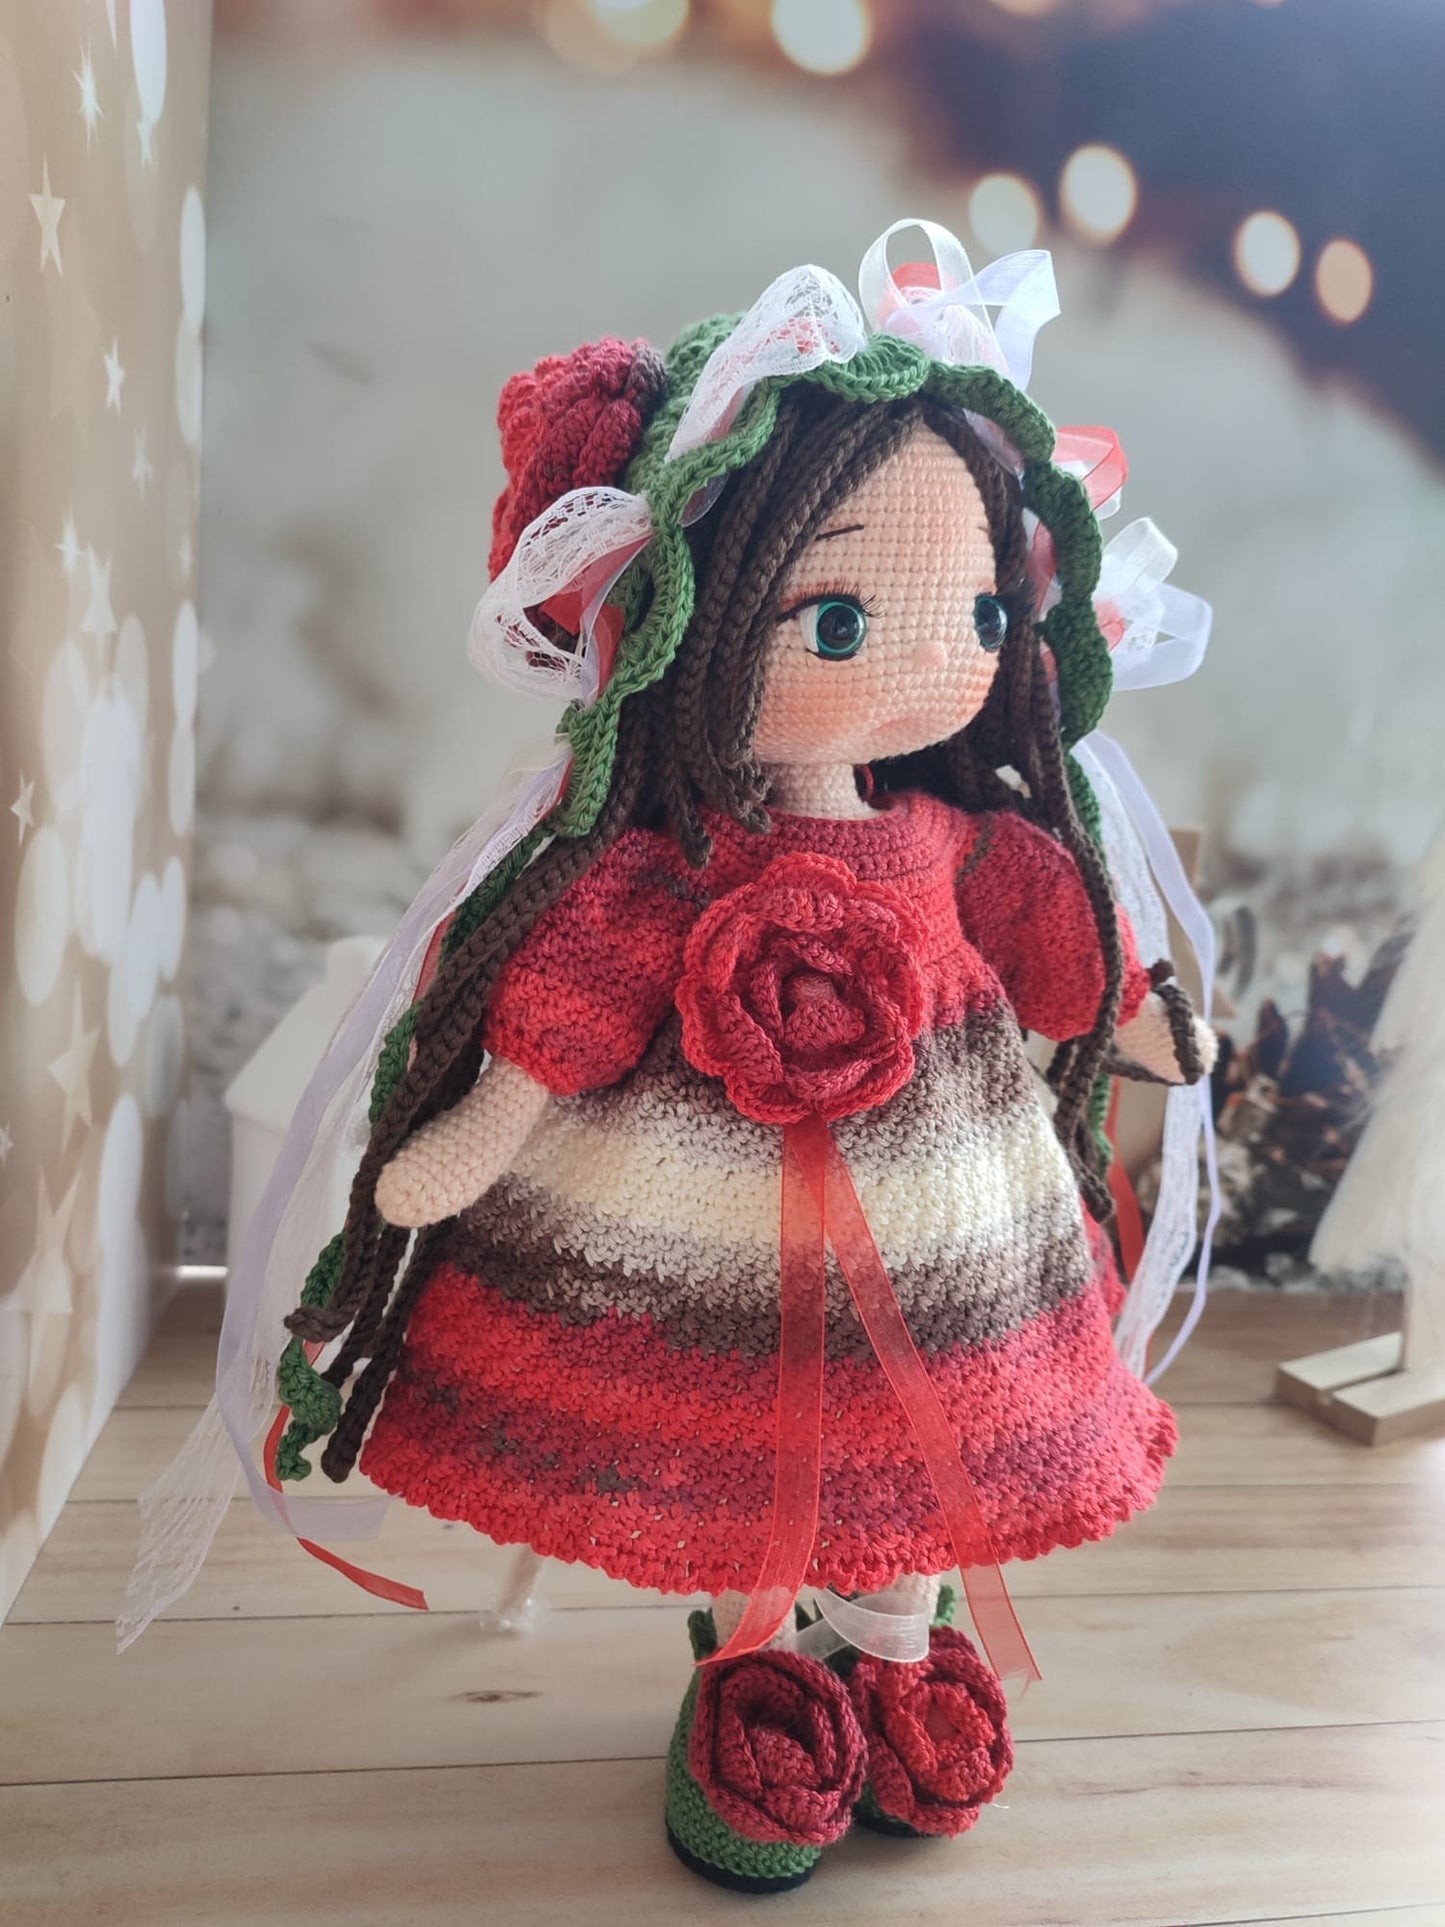 Clara Doll. Crochet Doll Princess with Colorful Dress, Amigurumi Doll Finished, Knit Doll, Handmade Doll, Homemade Doll, Hand Made Doll